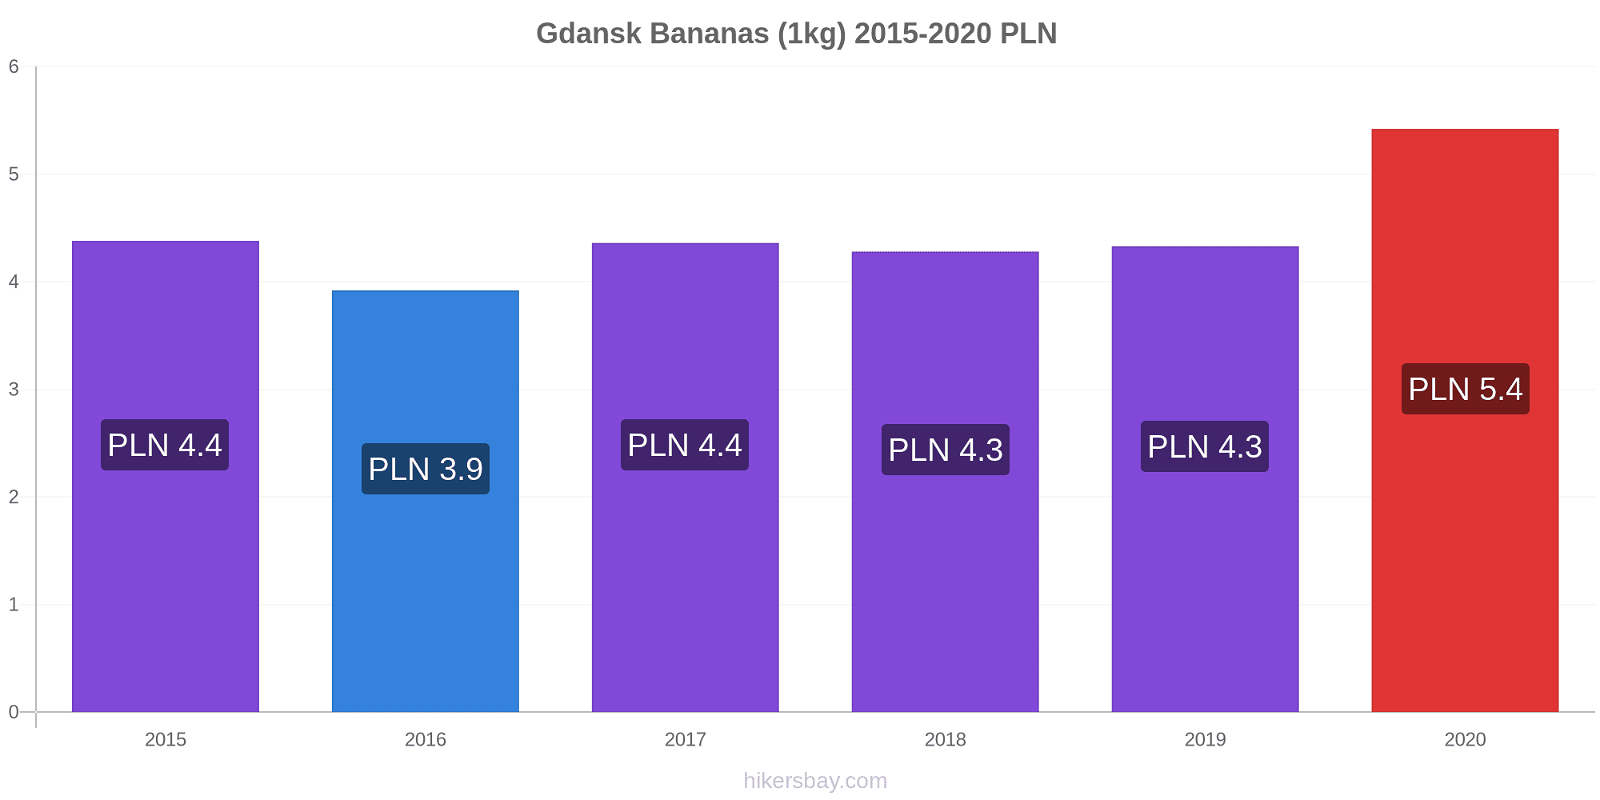 Gdansk price changes Bananas (1kg) hikersbay.com